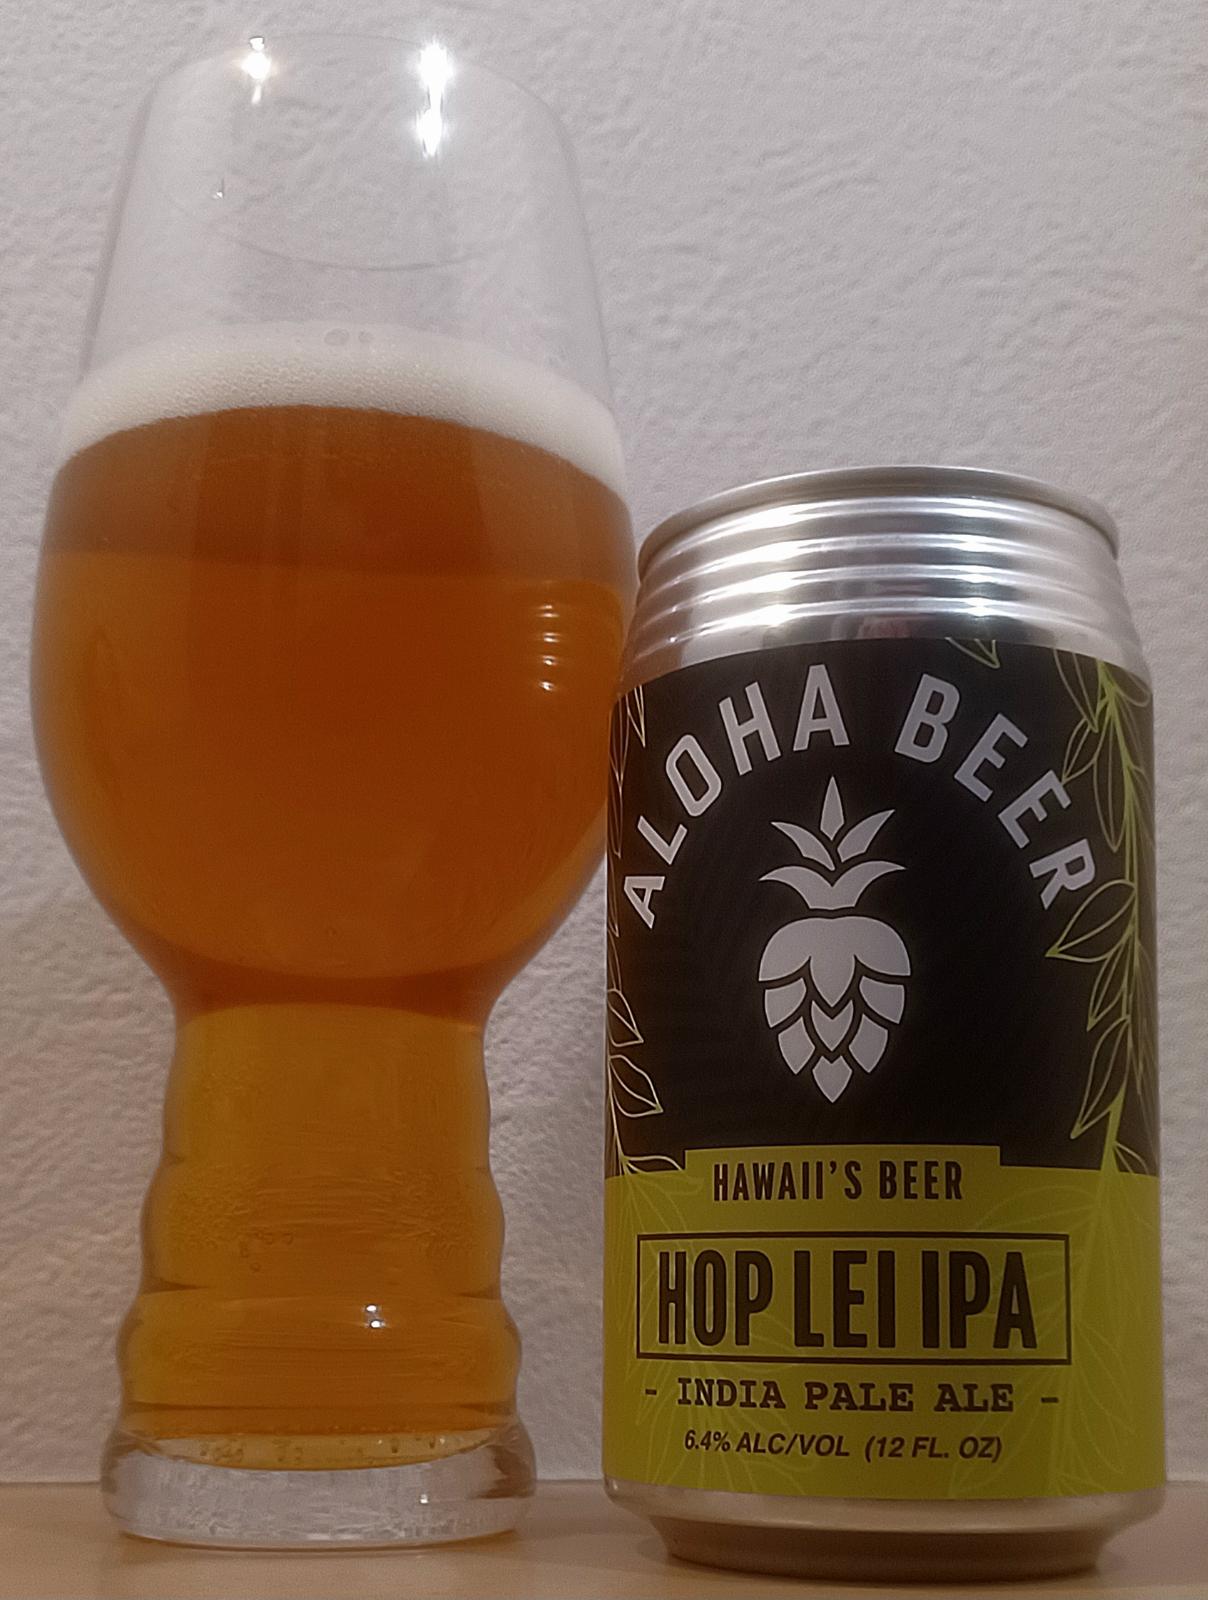 Hop Lei IPA